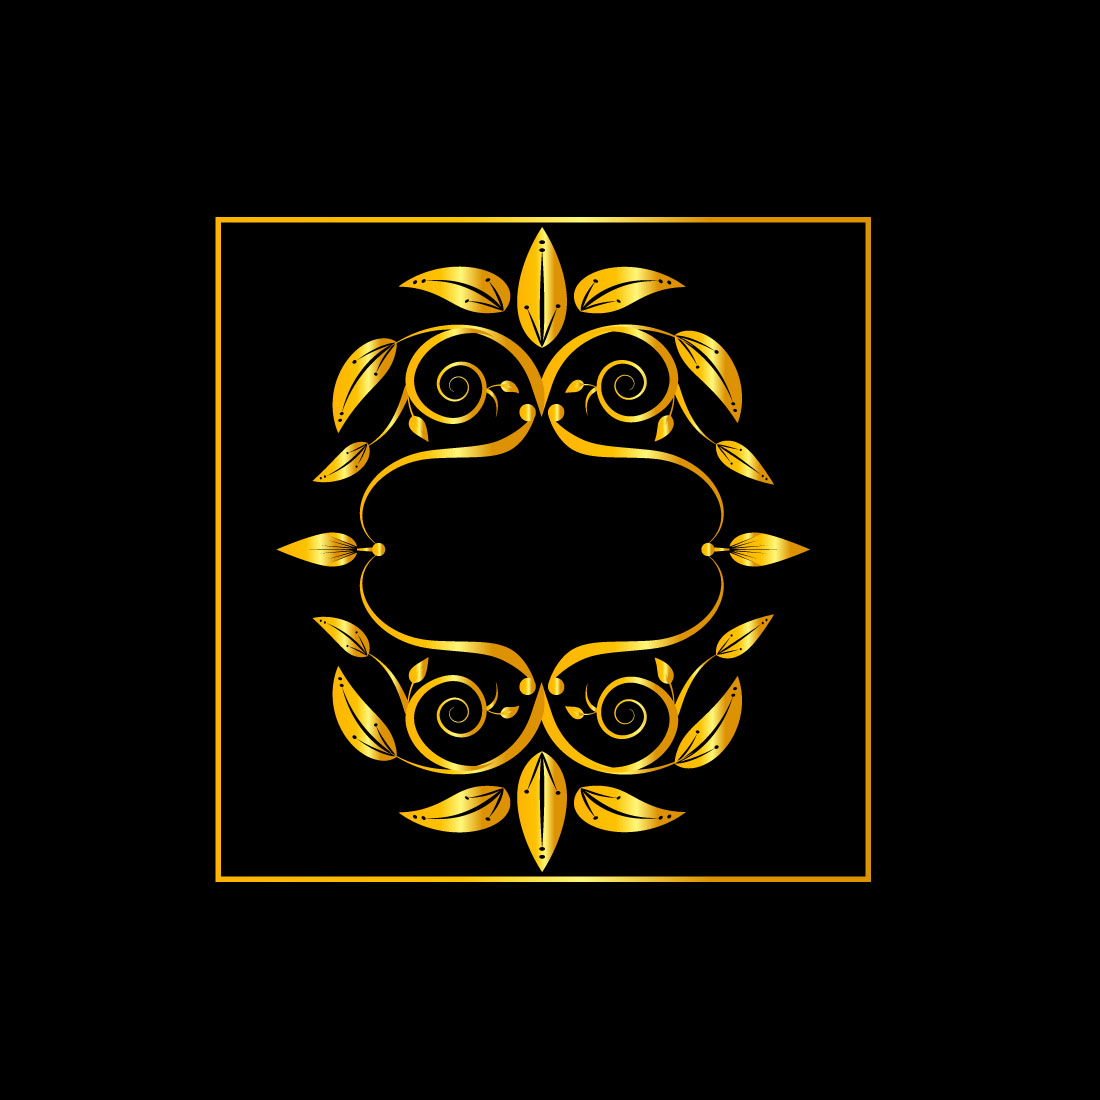 Image of enchanting golden frame with floral ornament